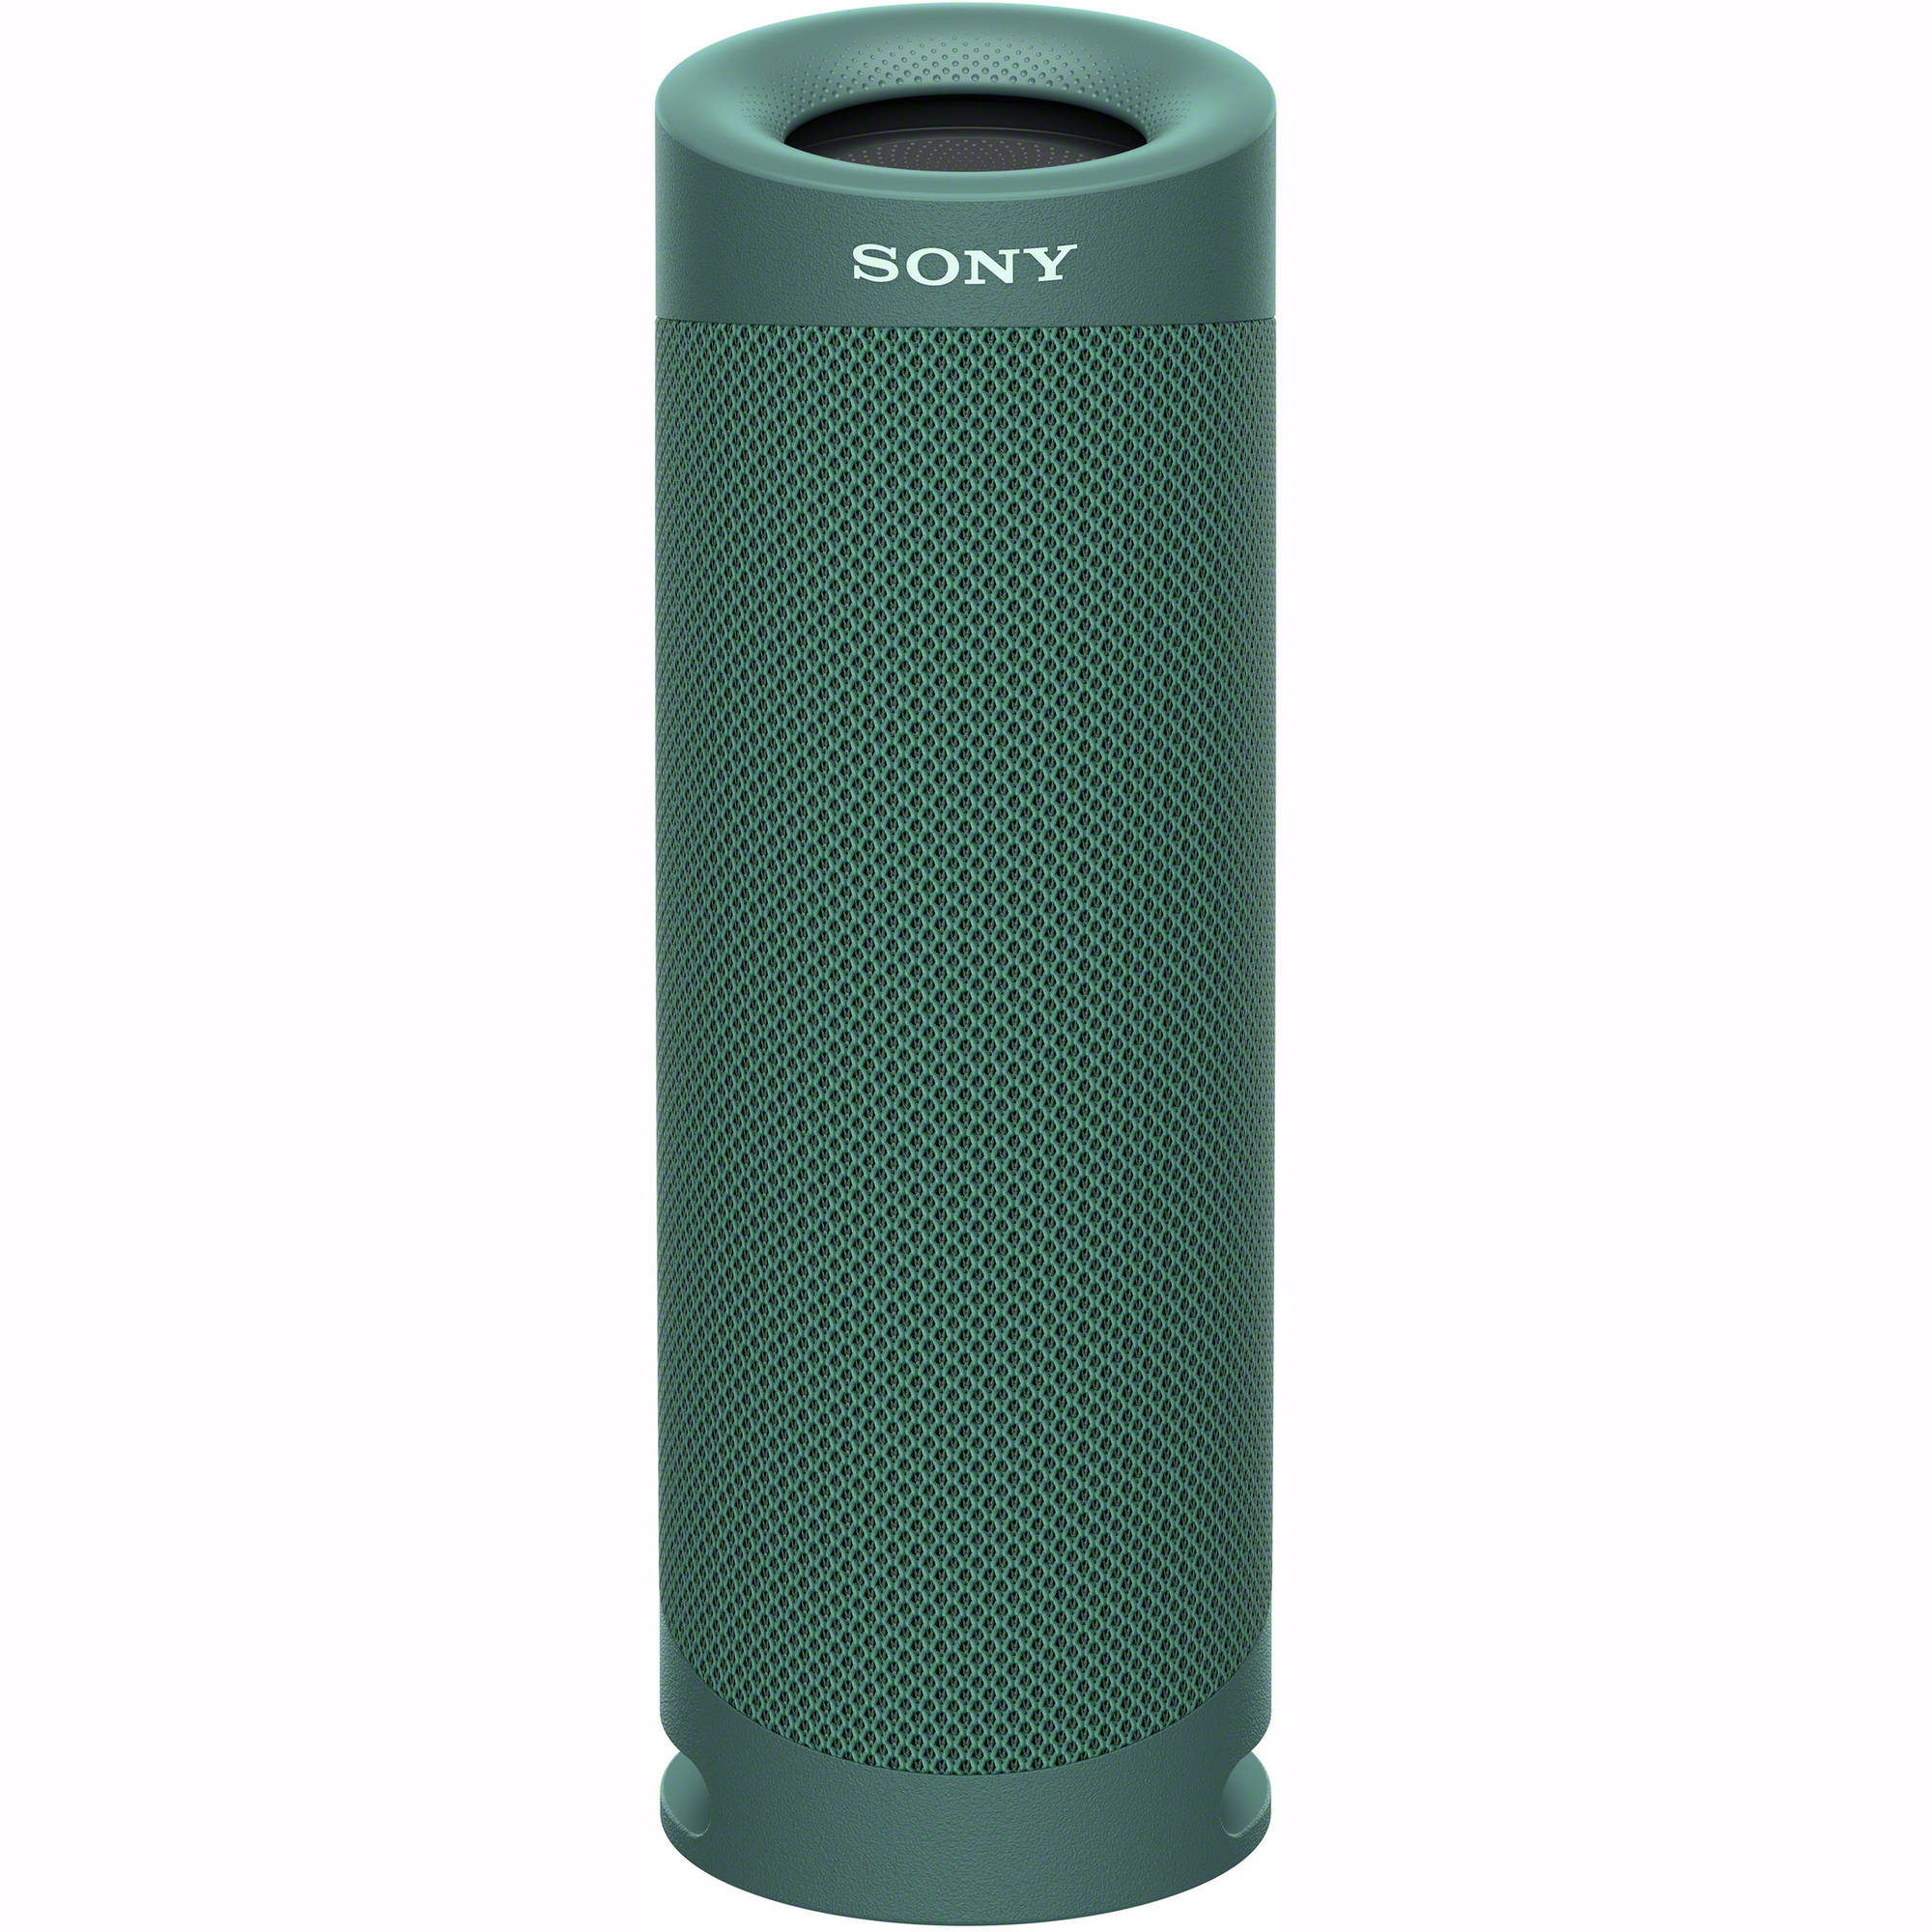 Altavoz Bluetooth portátil de Sony SRS-XB23 (verde)